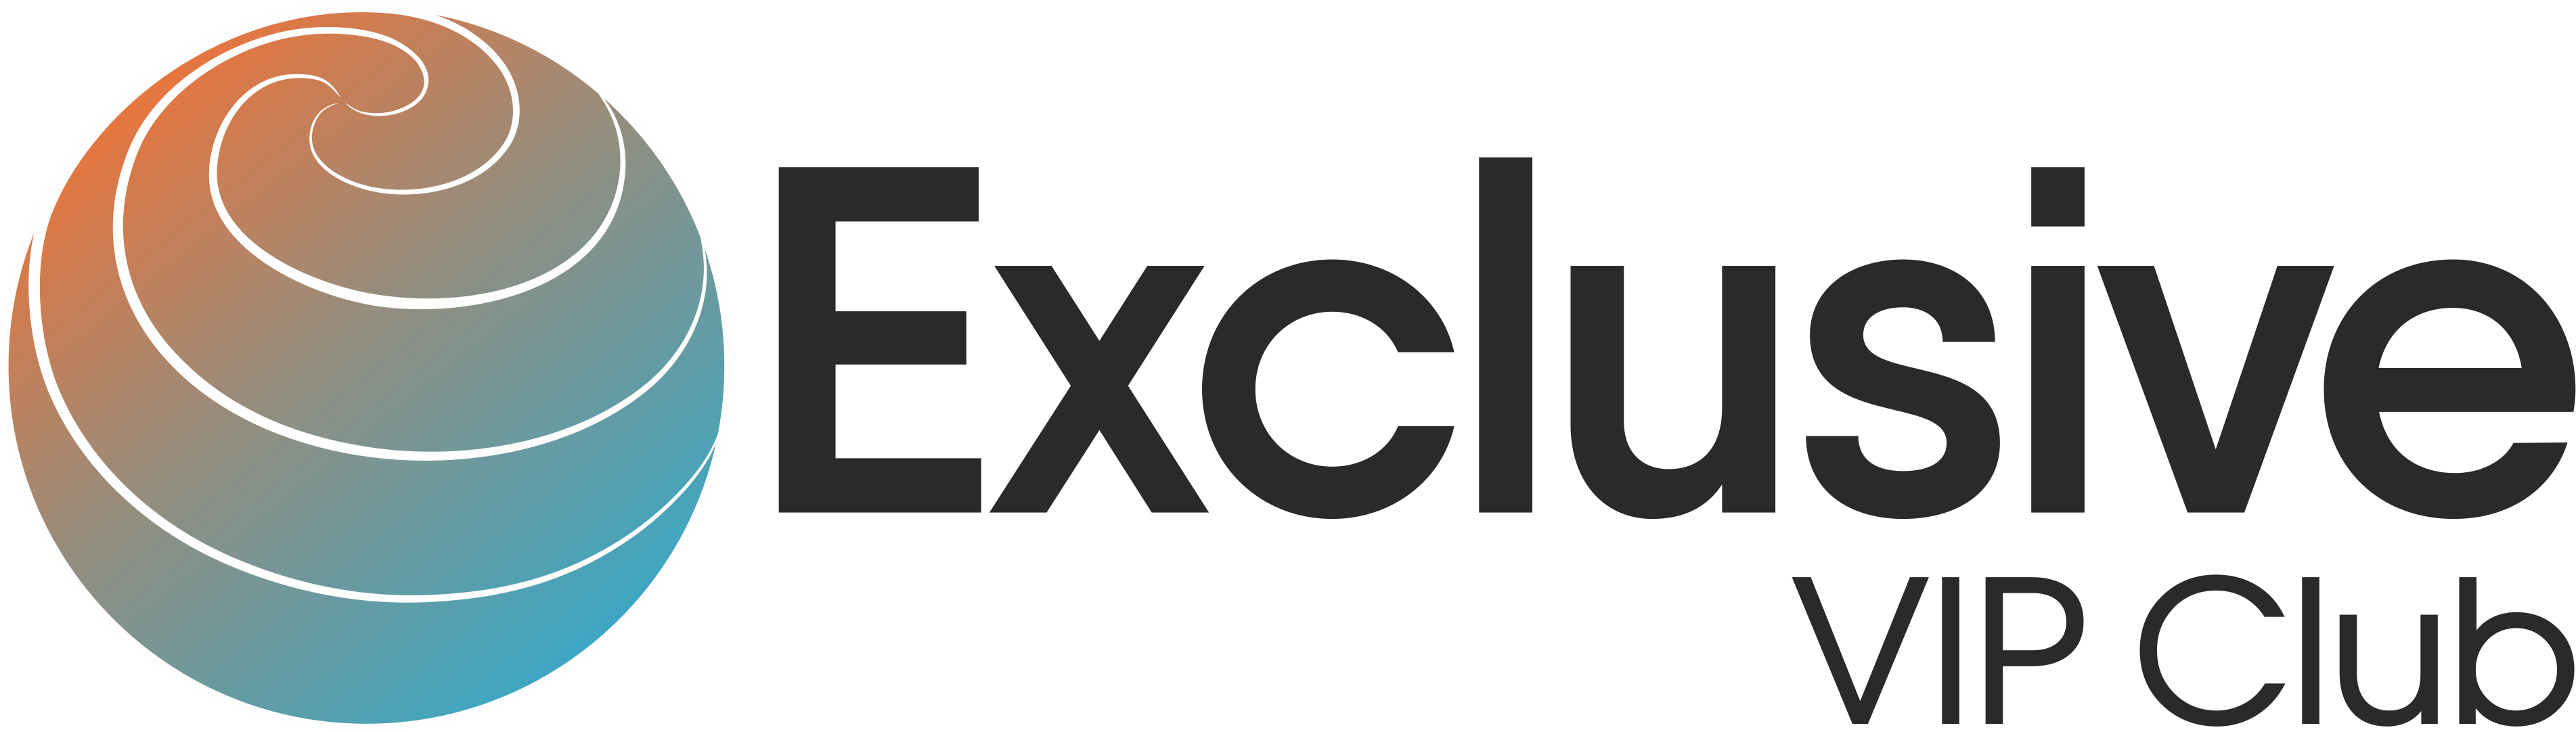 logo_exclusive